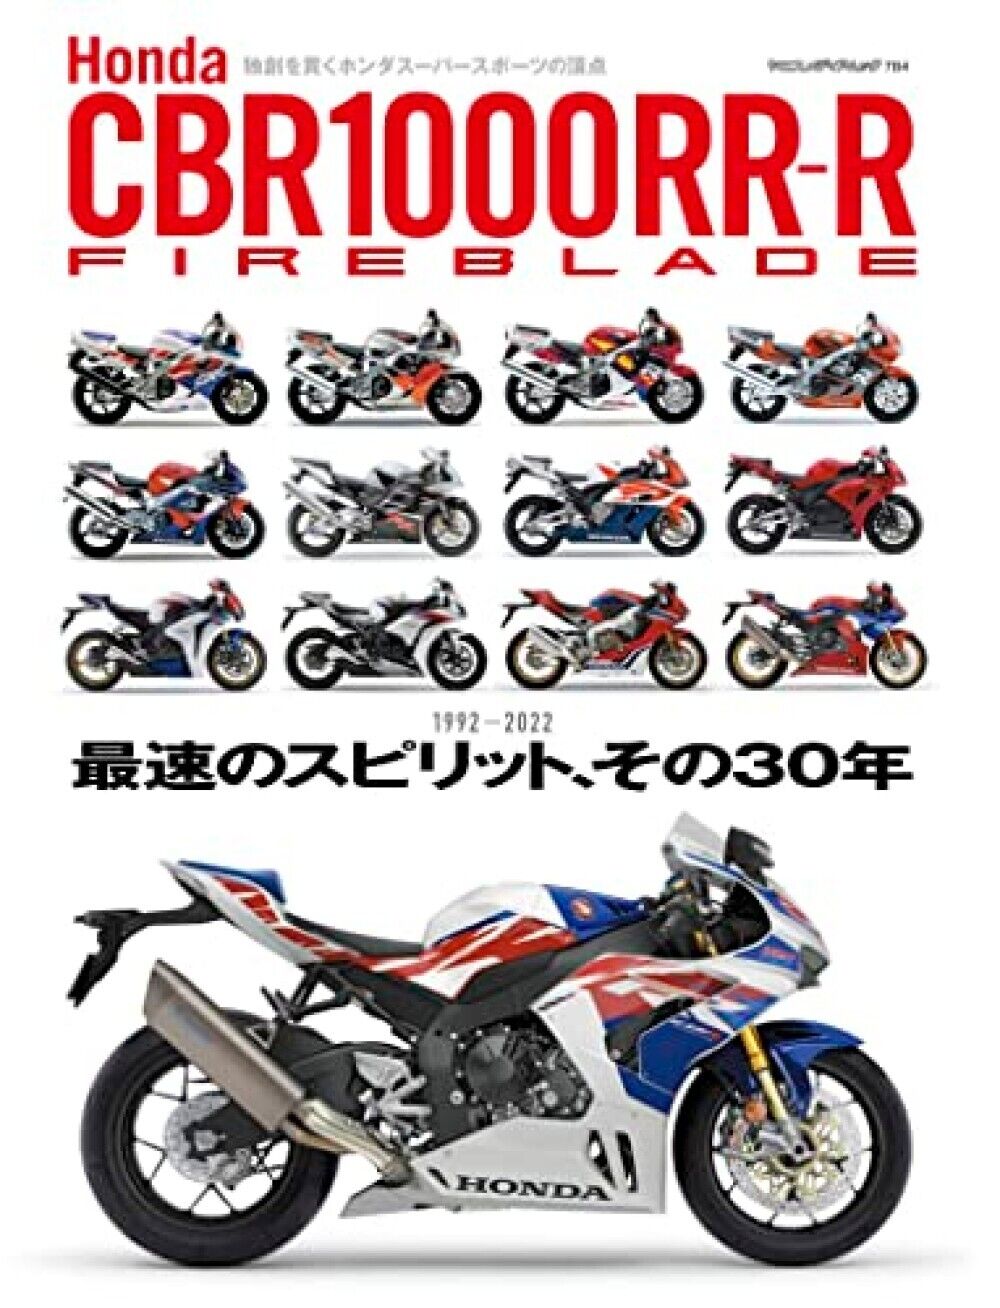 Honda CBR1000RR-R FIREBLADE The Fastest Spirit, 30 years Book NEW Japan